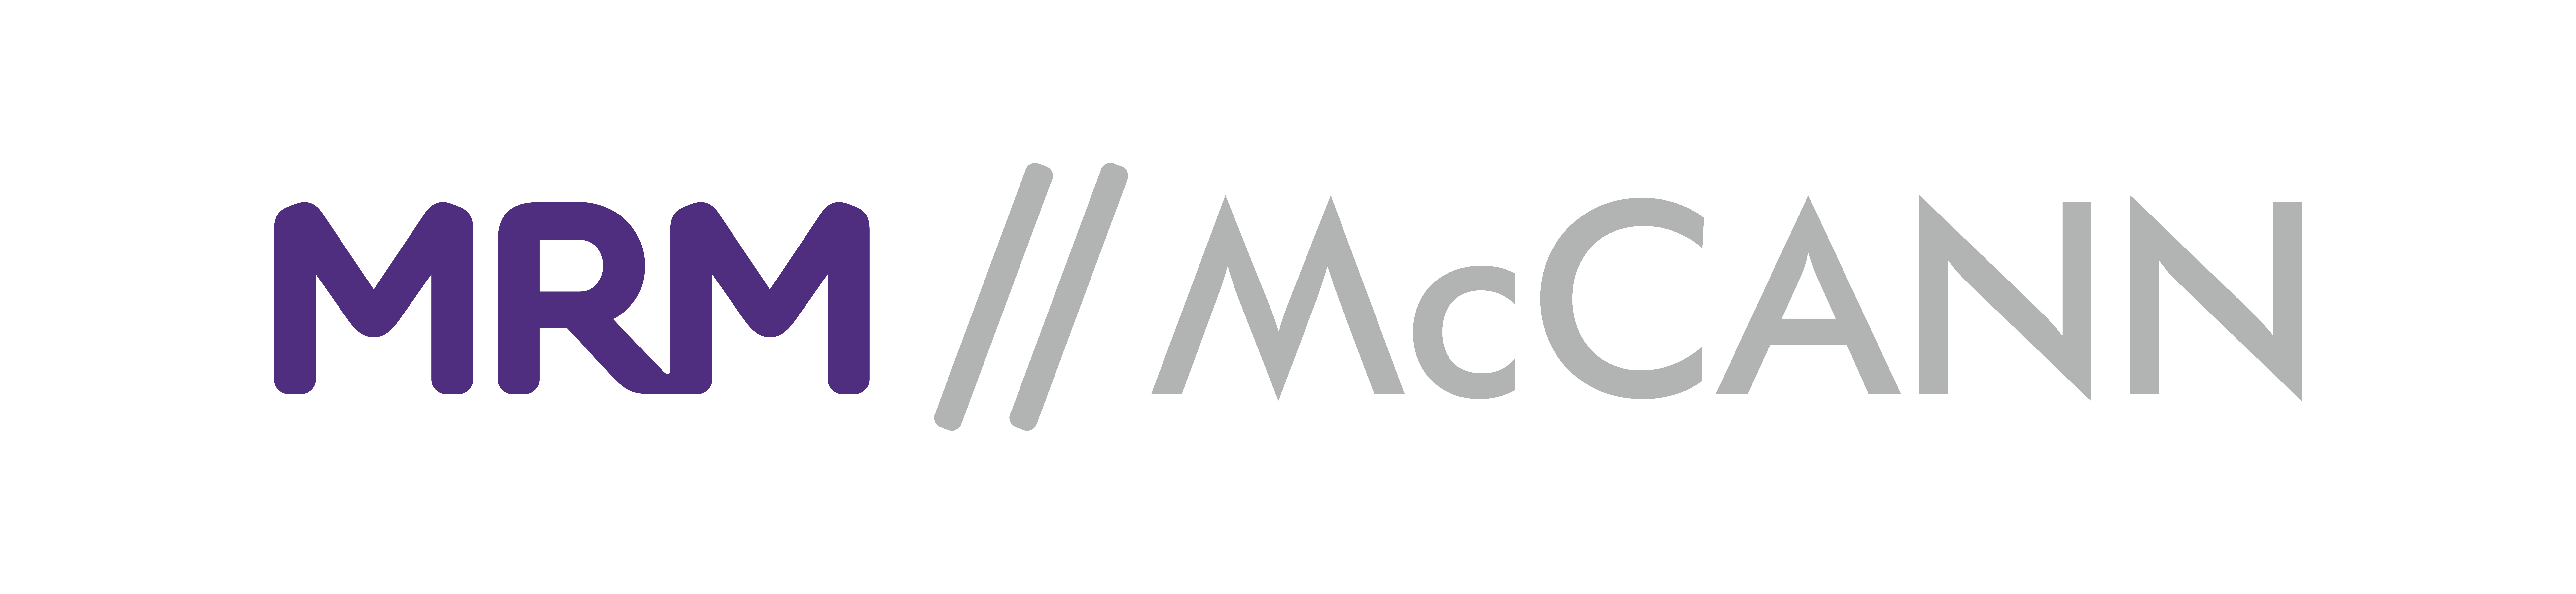 McCann Logo - Marketing Automation Manager (Marketo), MRM//McCann